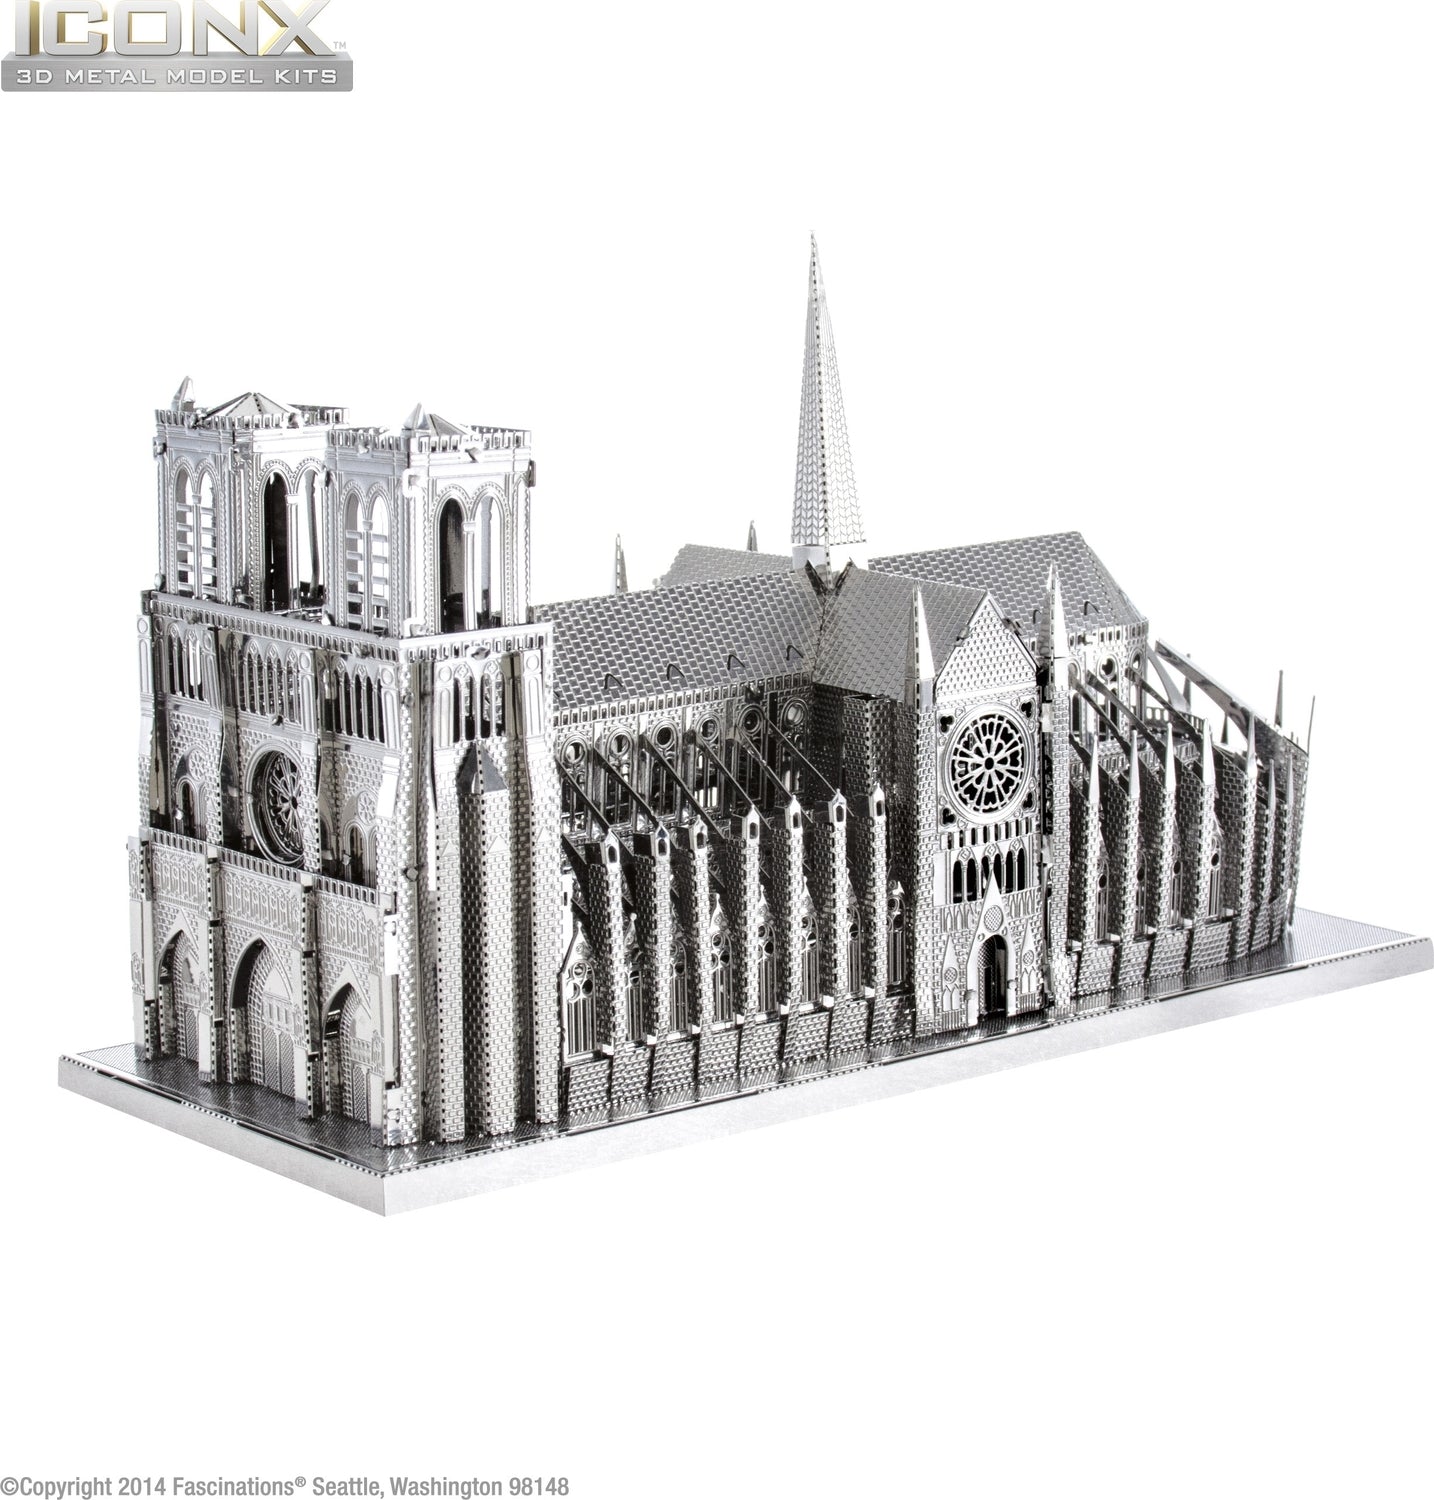 ICONX: Notre Dame